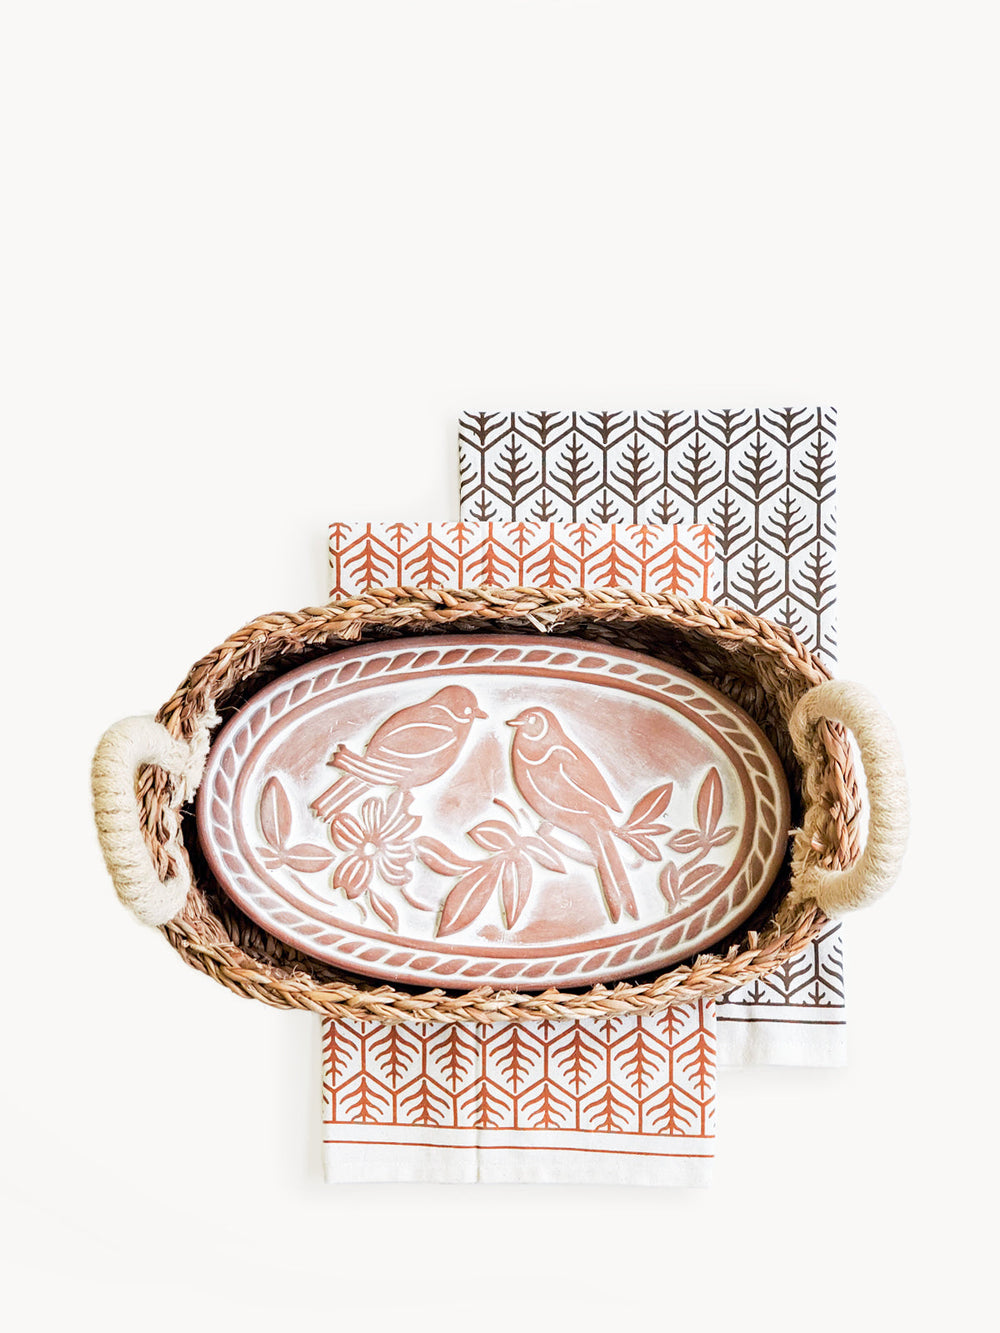 Bread Warmer & Basket Gift Set with Tea Towel - Lovebird Oval by KORISSA